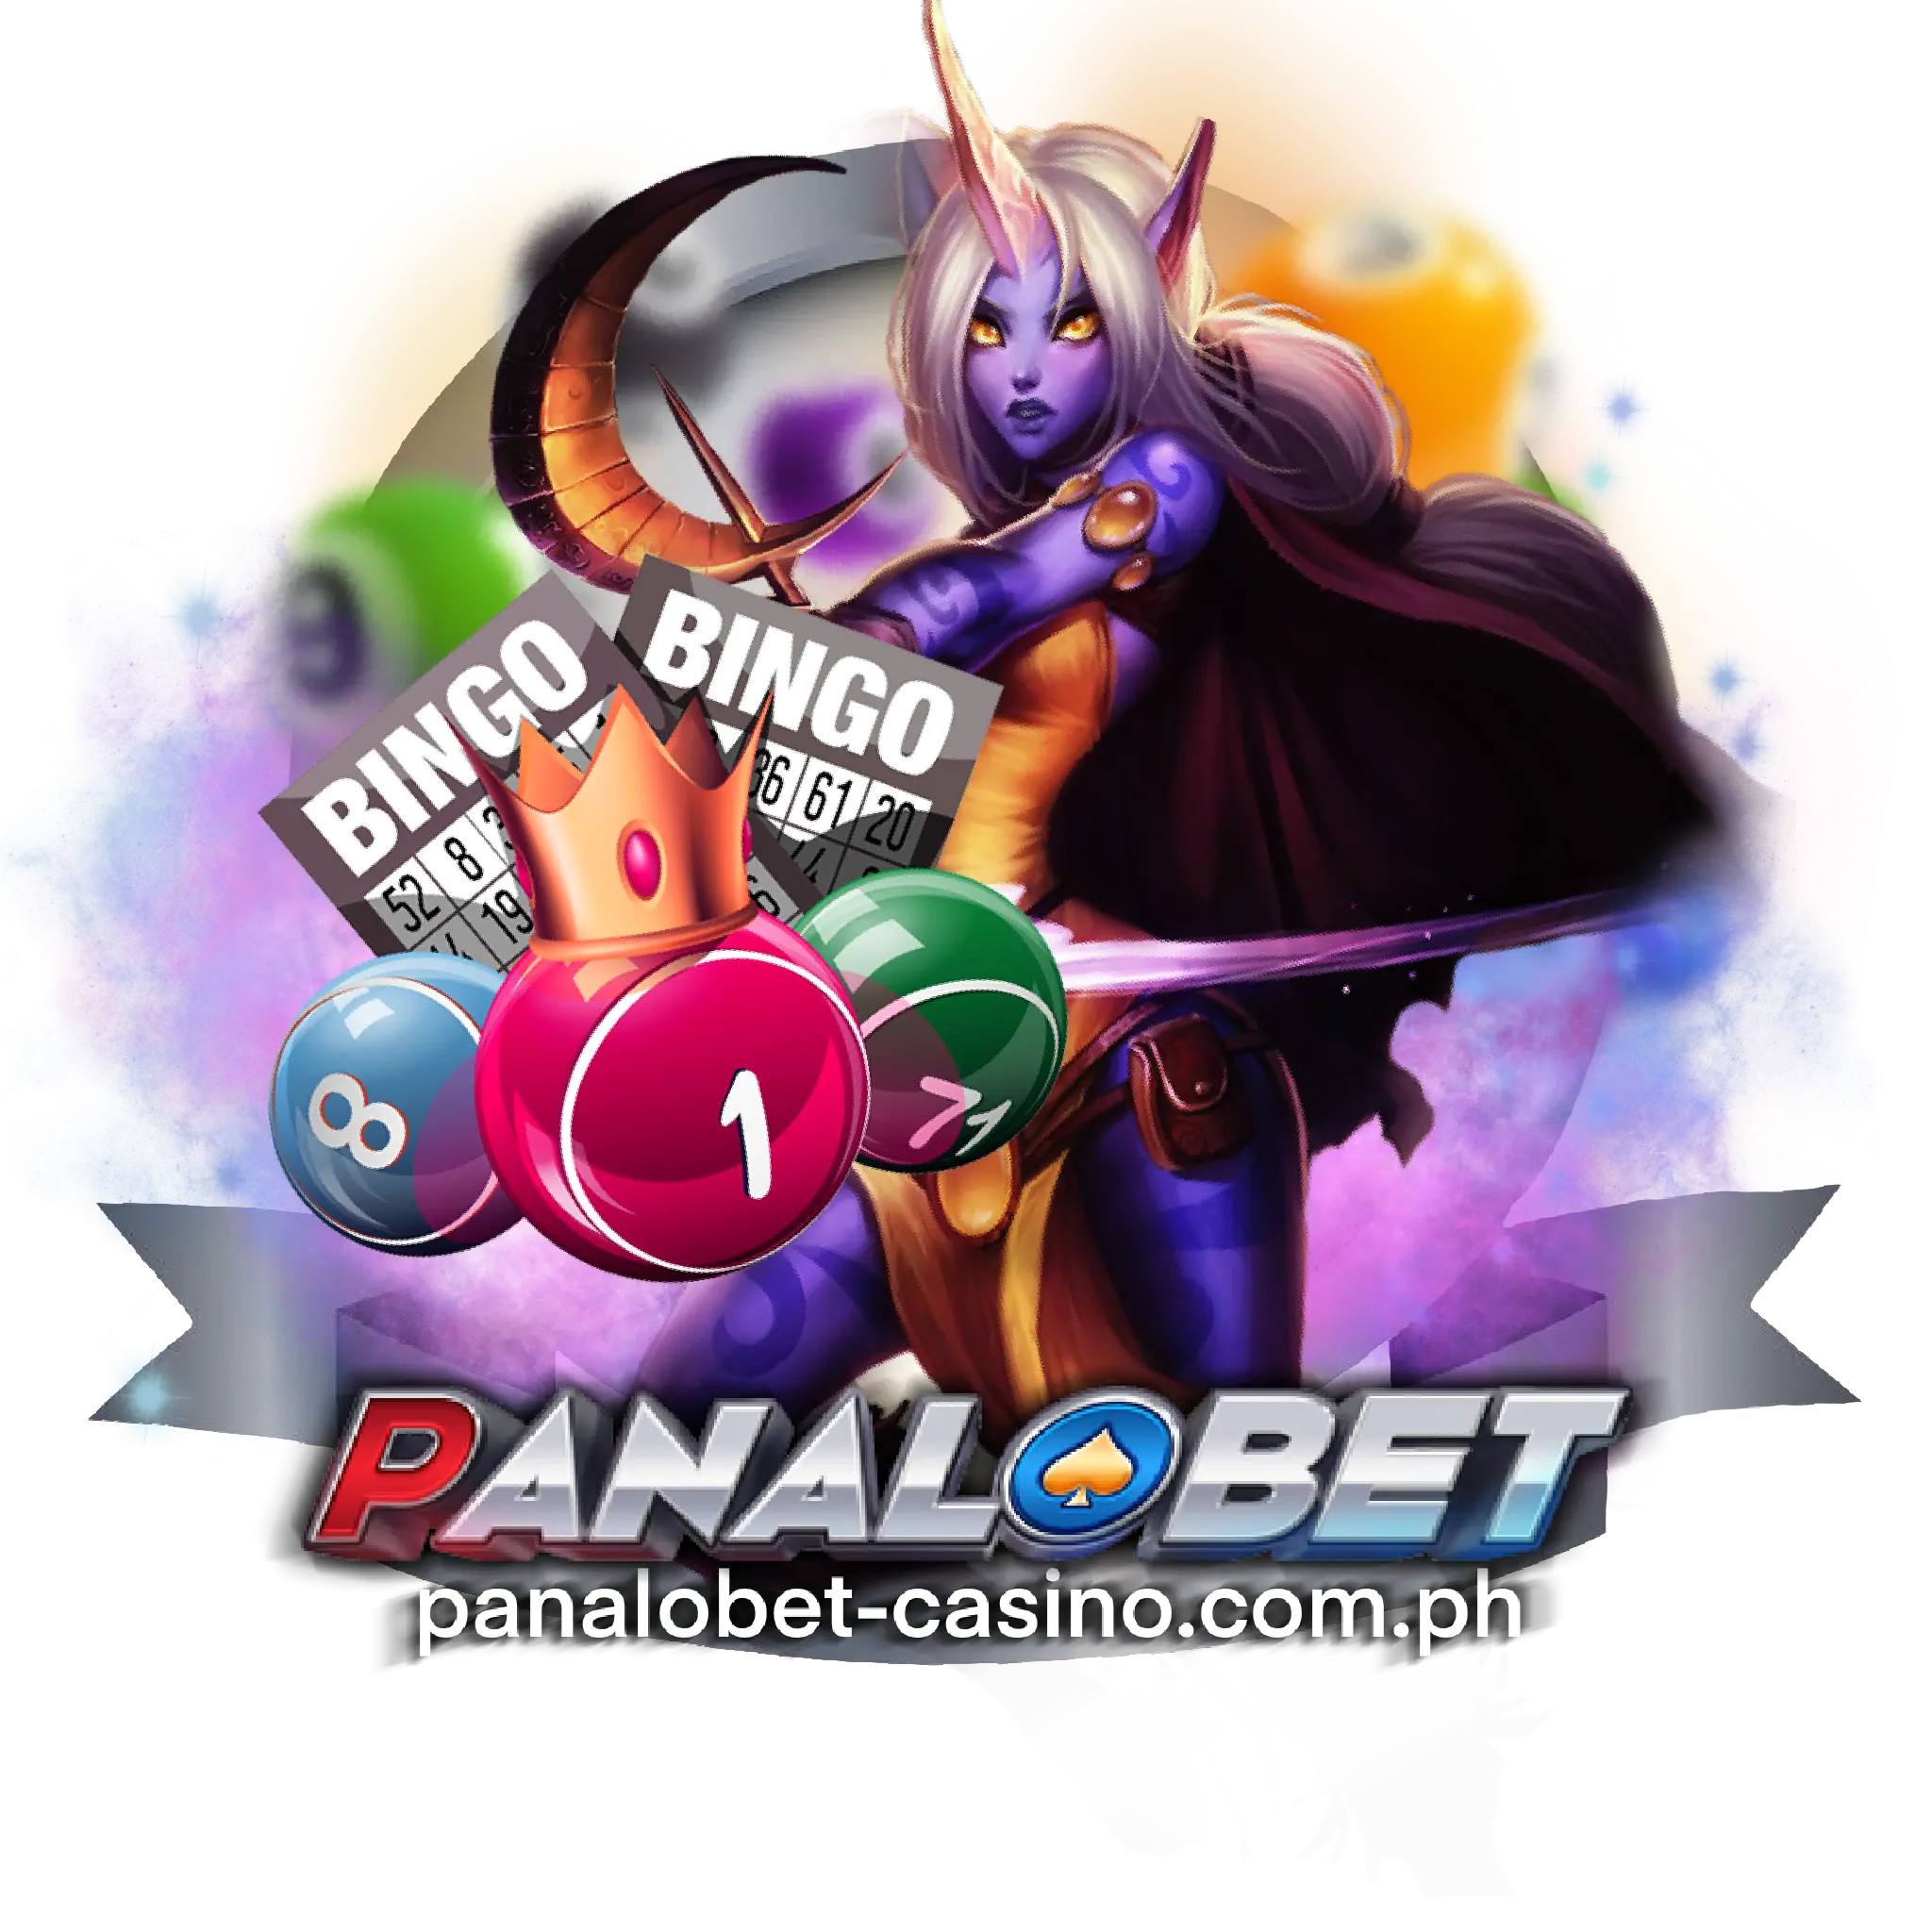 PANALOBET Online Casino Lottery